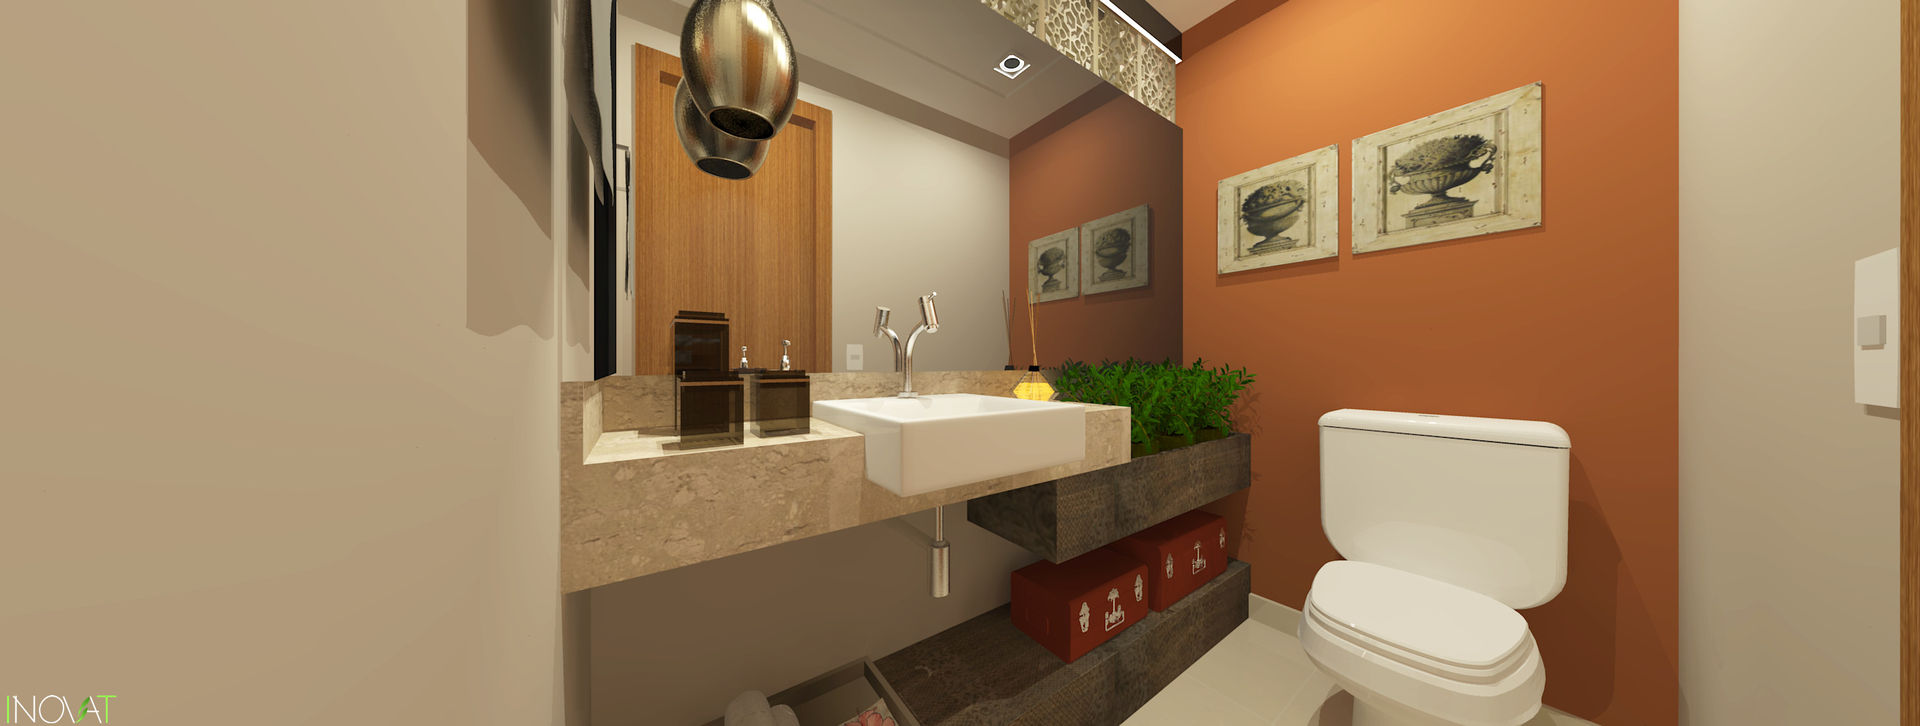 apartamento ecoville, INOVAT Arquitetura e interiores INOVAT Arquitetura e interiores Modern bathroom Wood Wood effect